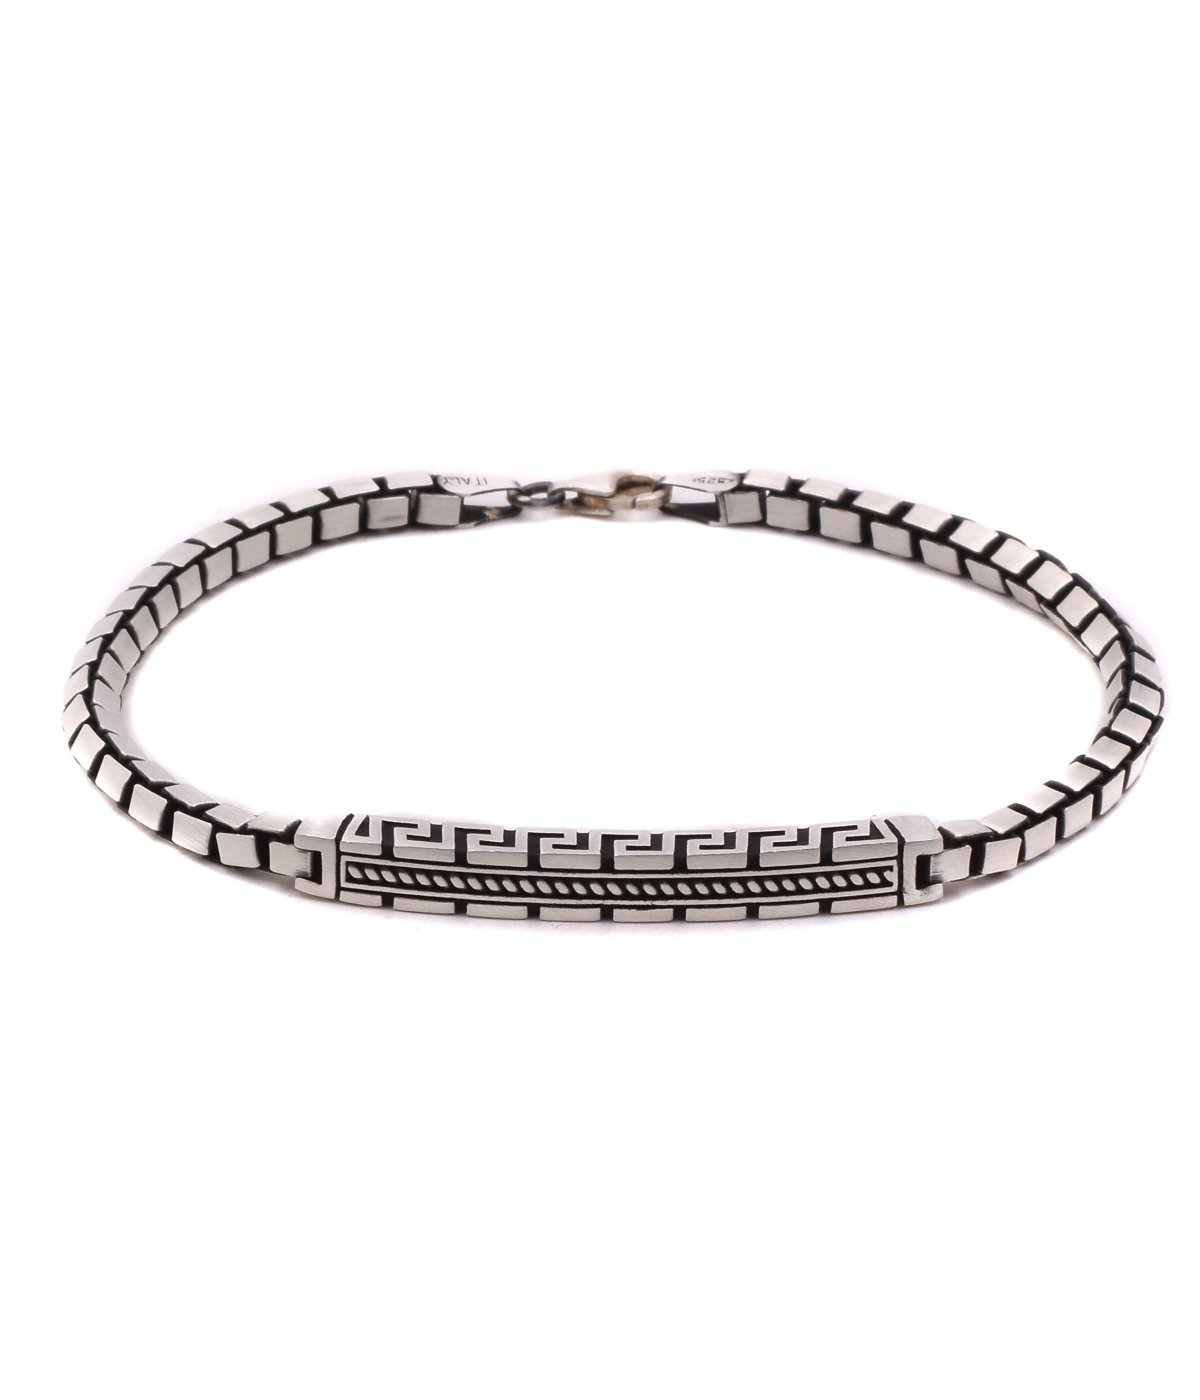 92.5 Silver Unique Design Premium-Grade Quality Bracelet for Men